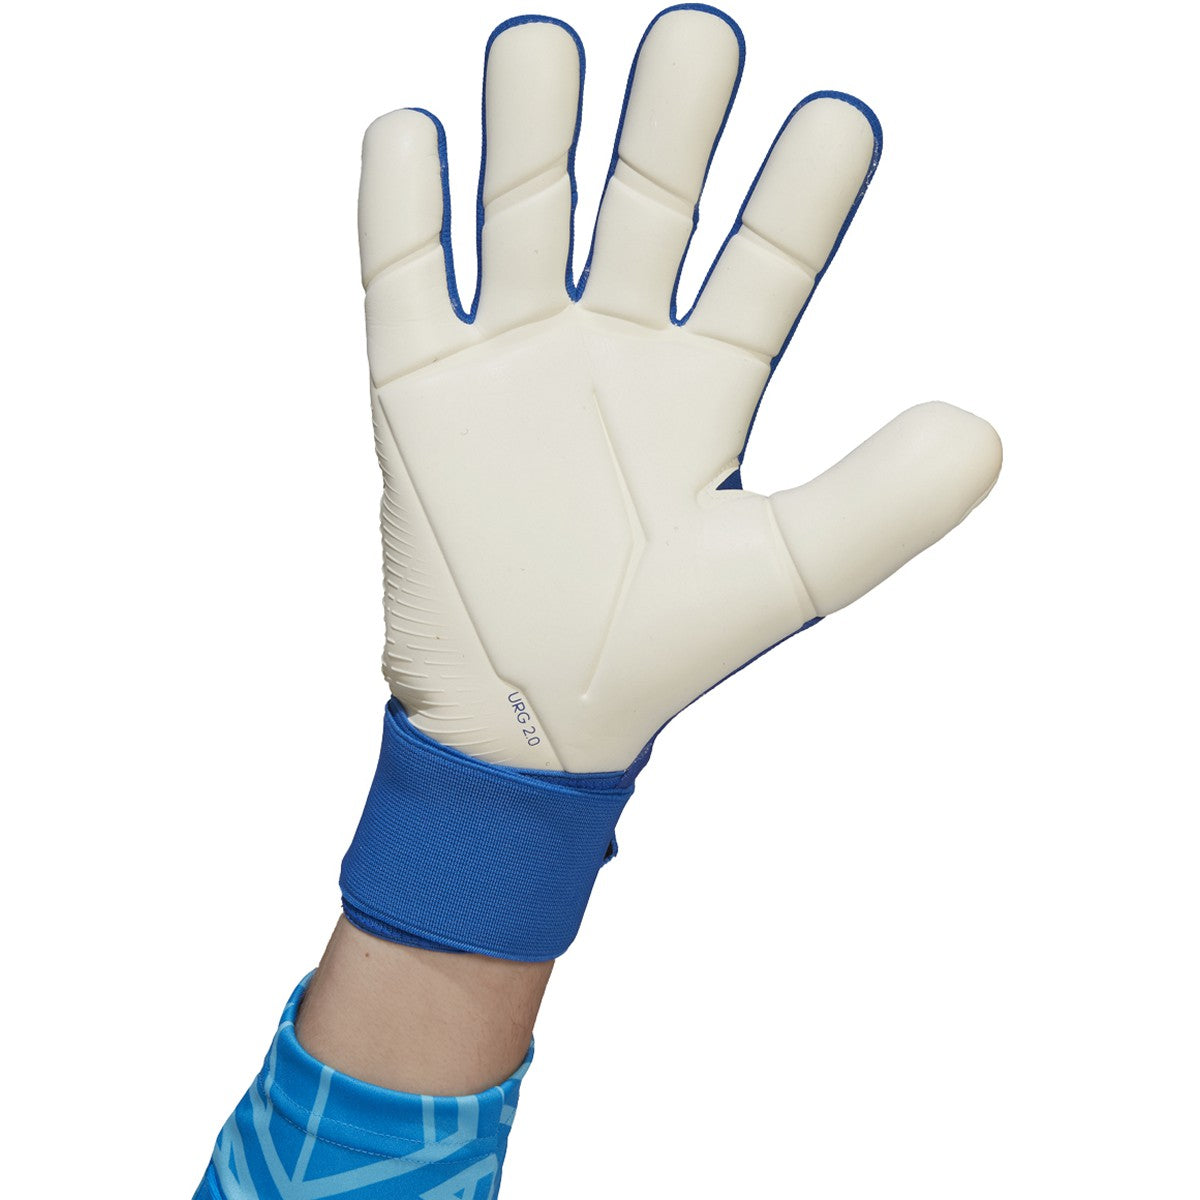 Origineel Ijver Alternatief voorstel adidas Predator Glove Competition | H43776 | Goal Kick Soccer